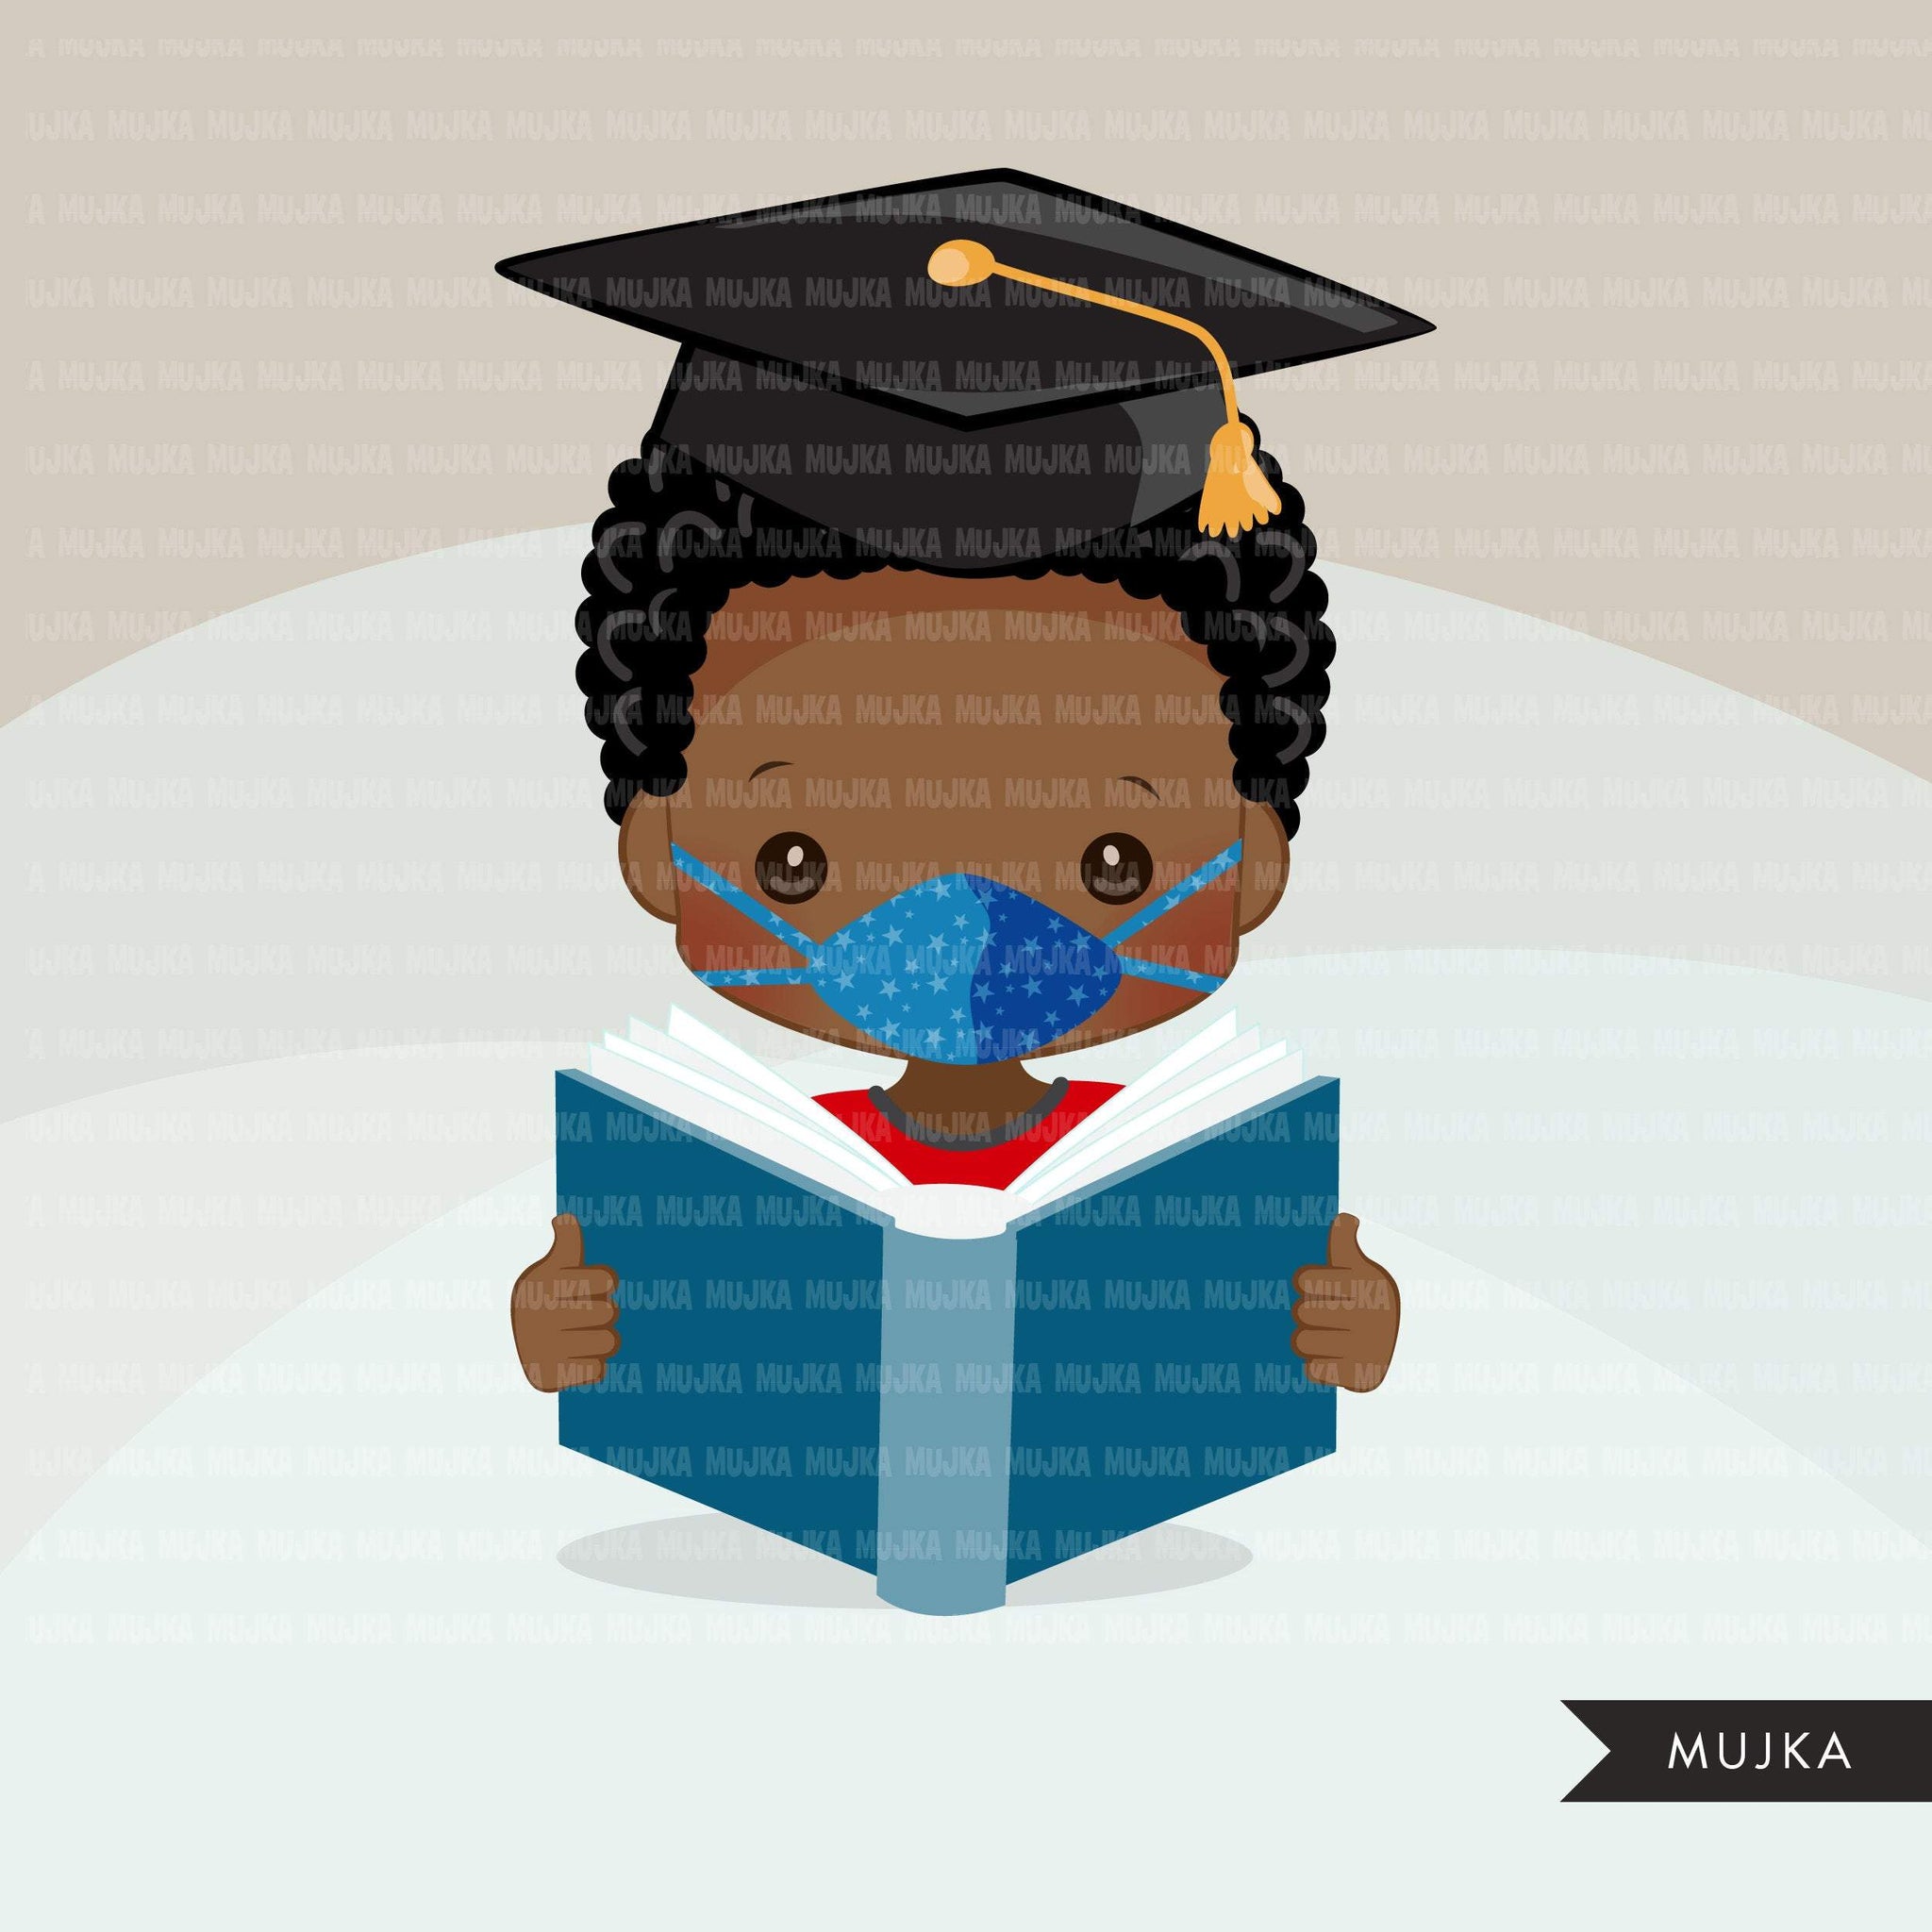 Graduation Clipart, graduate black boys with book and mask, school, student class of 2020 covid quarantine graduation graphics, PNG clip art